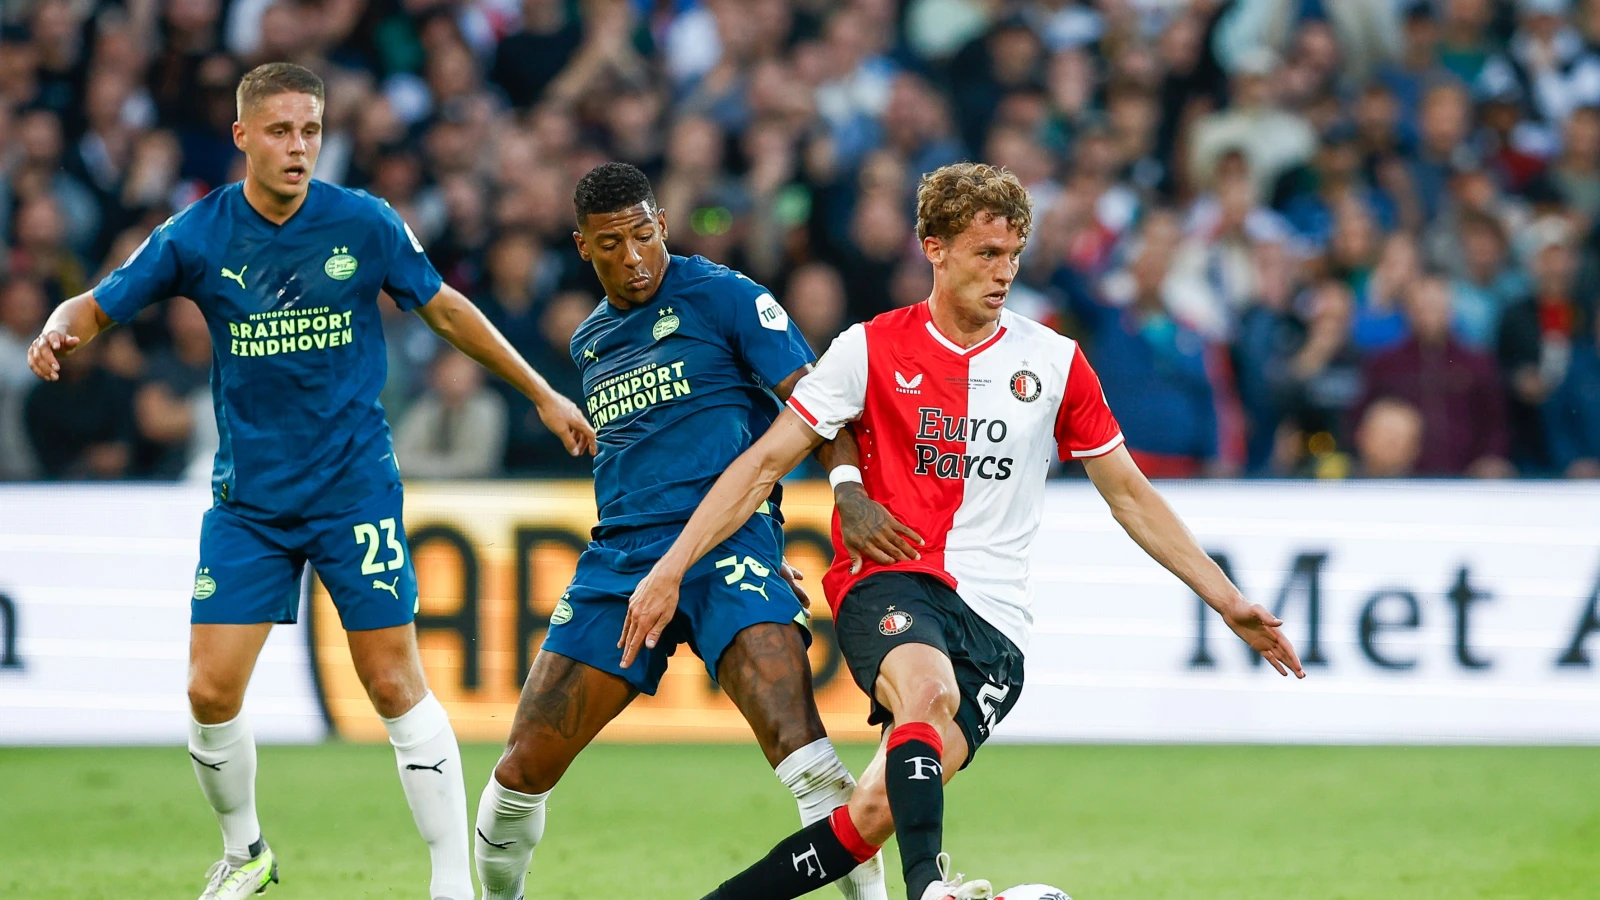 MATCHDAY | Feyenoord - Fortuna Sittard